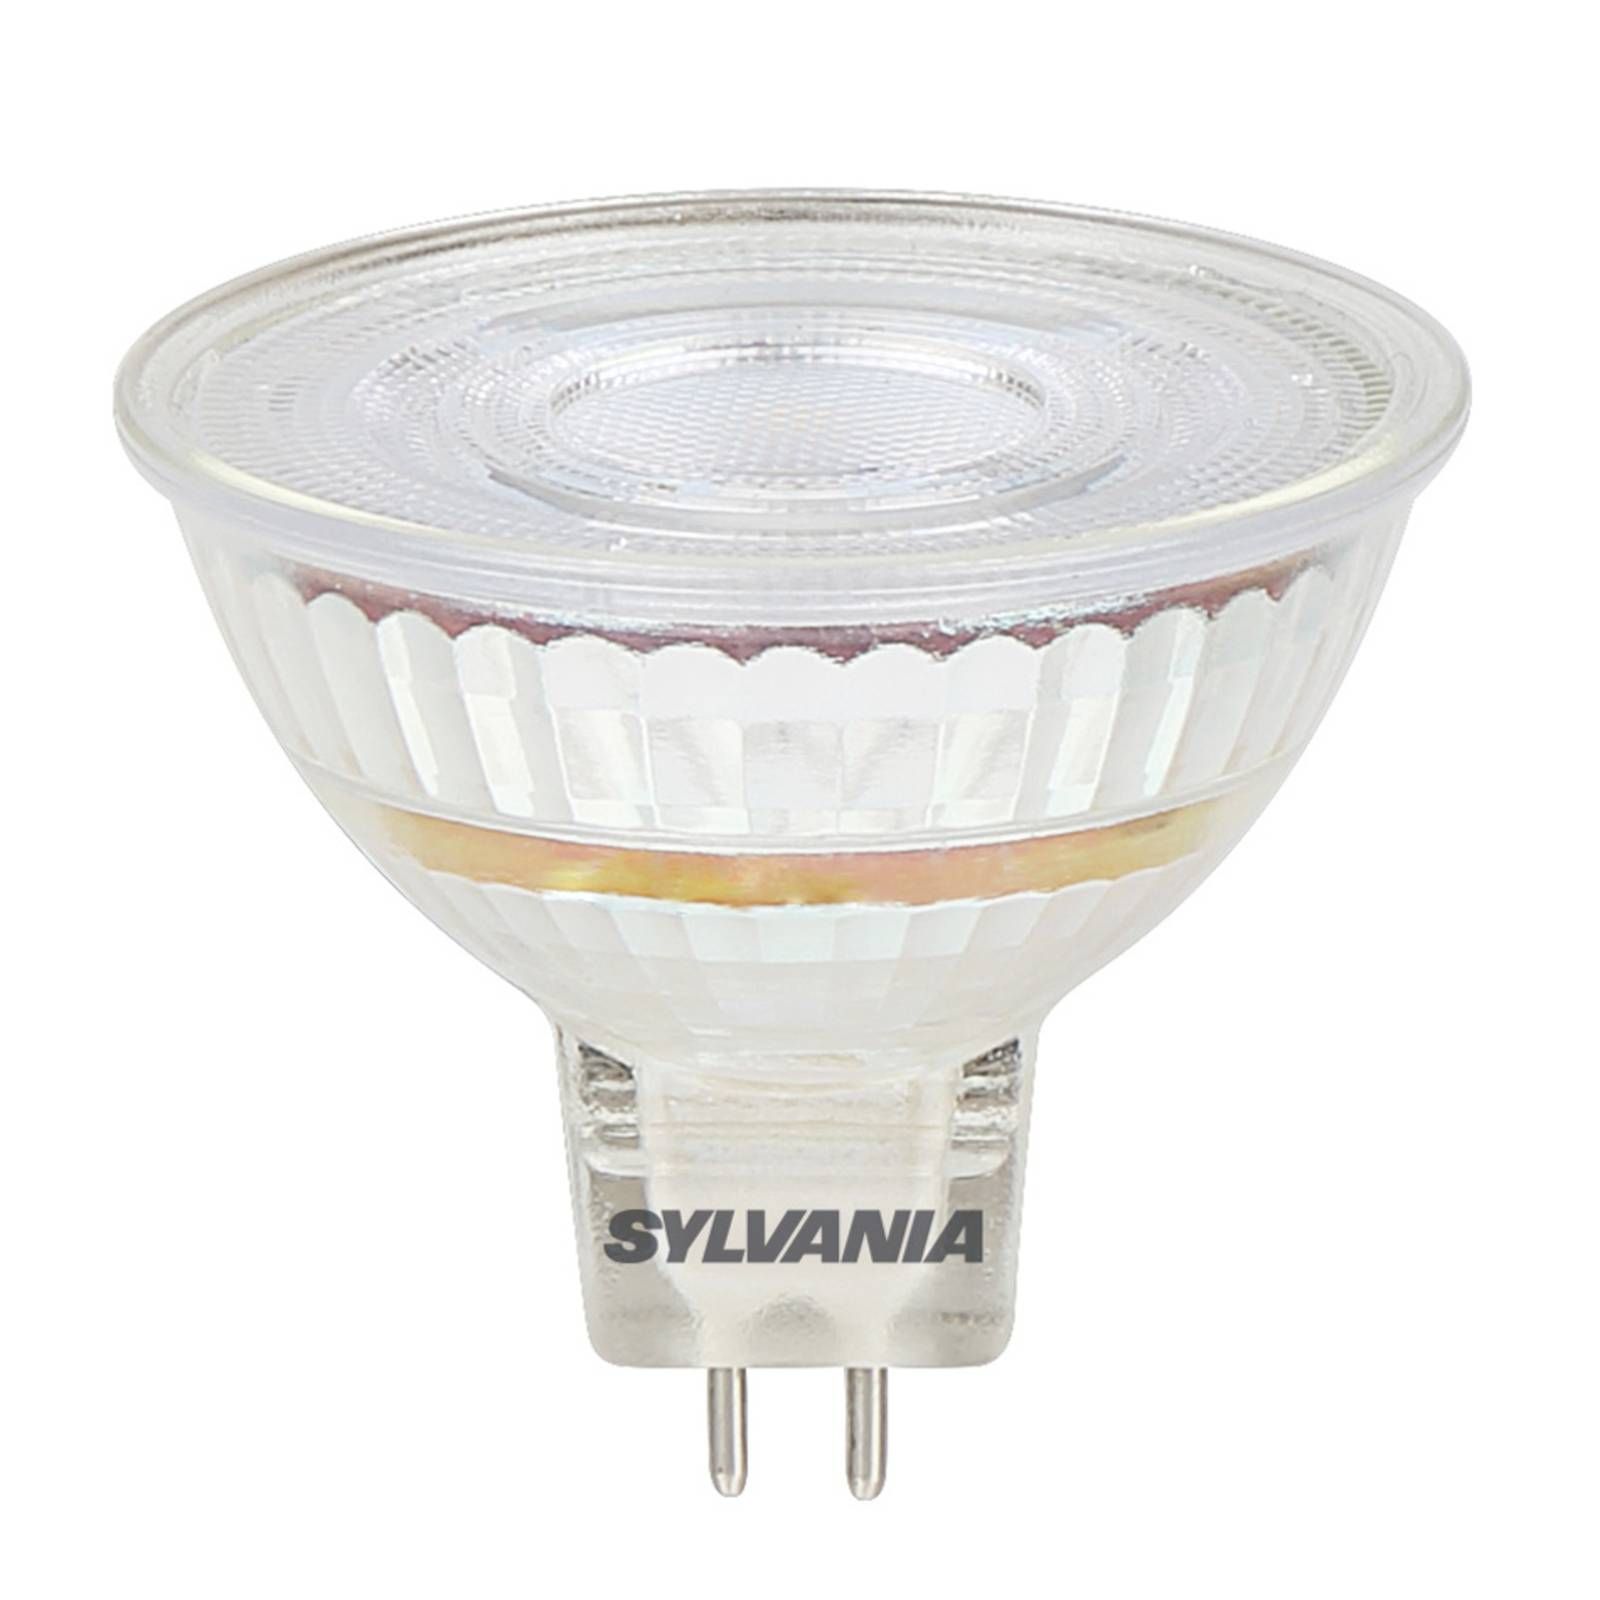 Sylvania LED reflektor GU5, 3 Superia MR16 7, 5Wstmieva 4000K, sklo, GU5.3 / MR16, 7.5W, Energialuokka: F, P: 4.4 cm